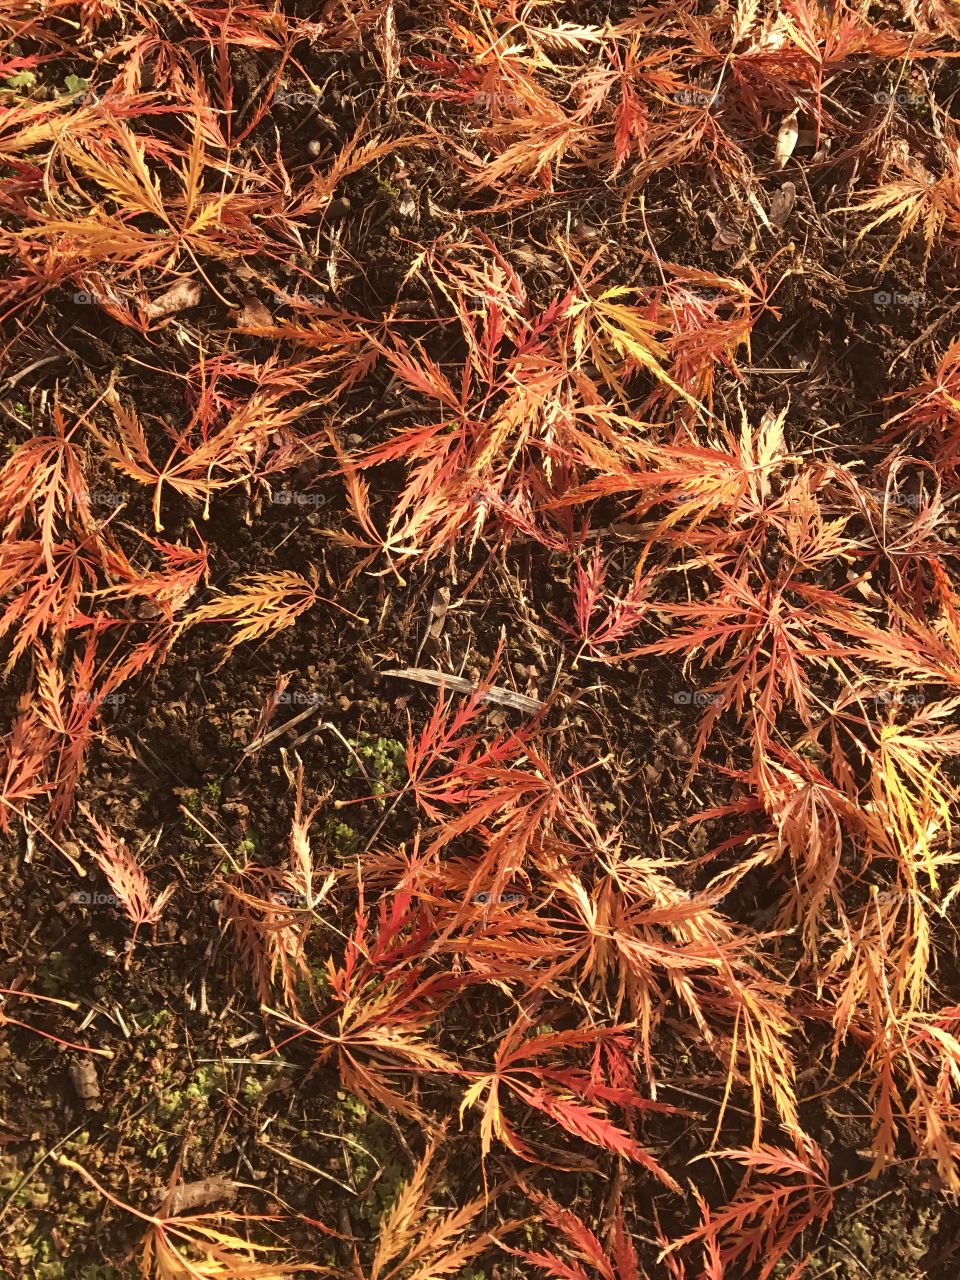 Autumn maple leaves